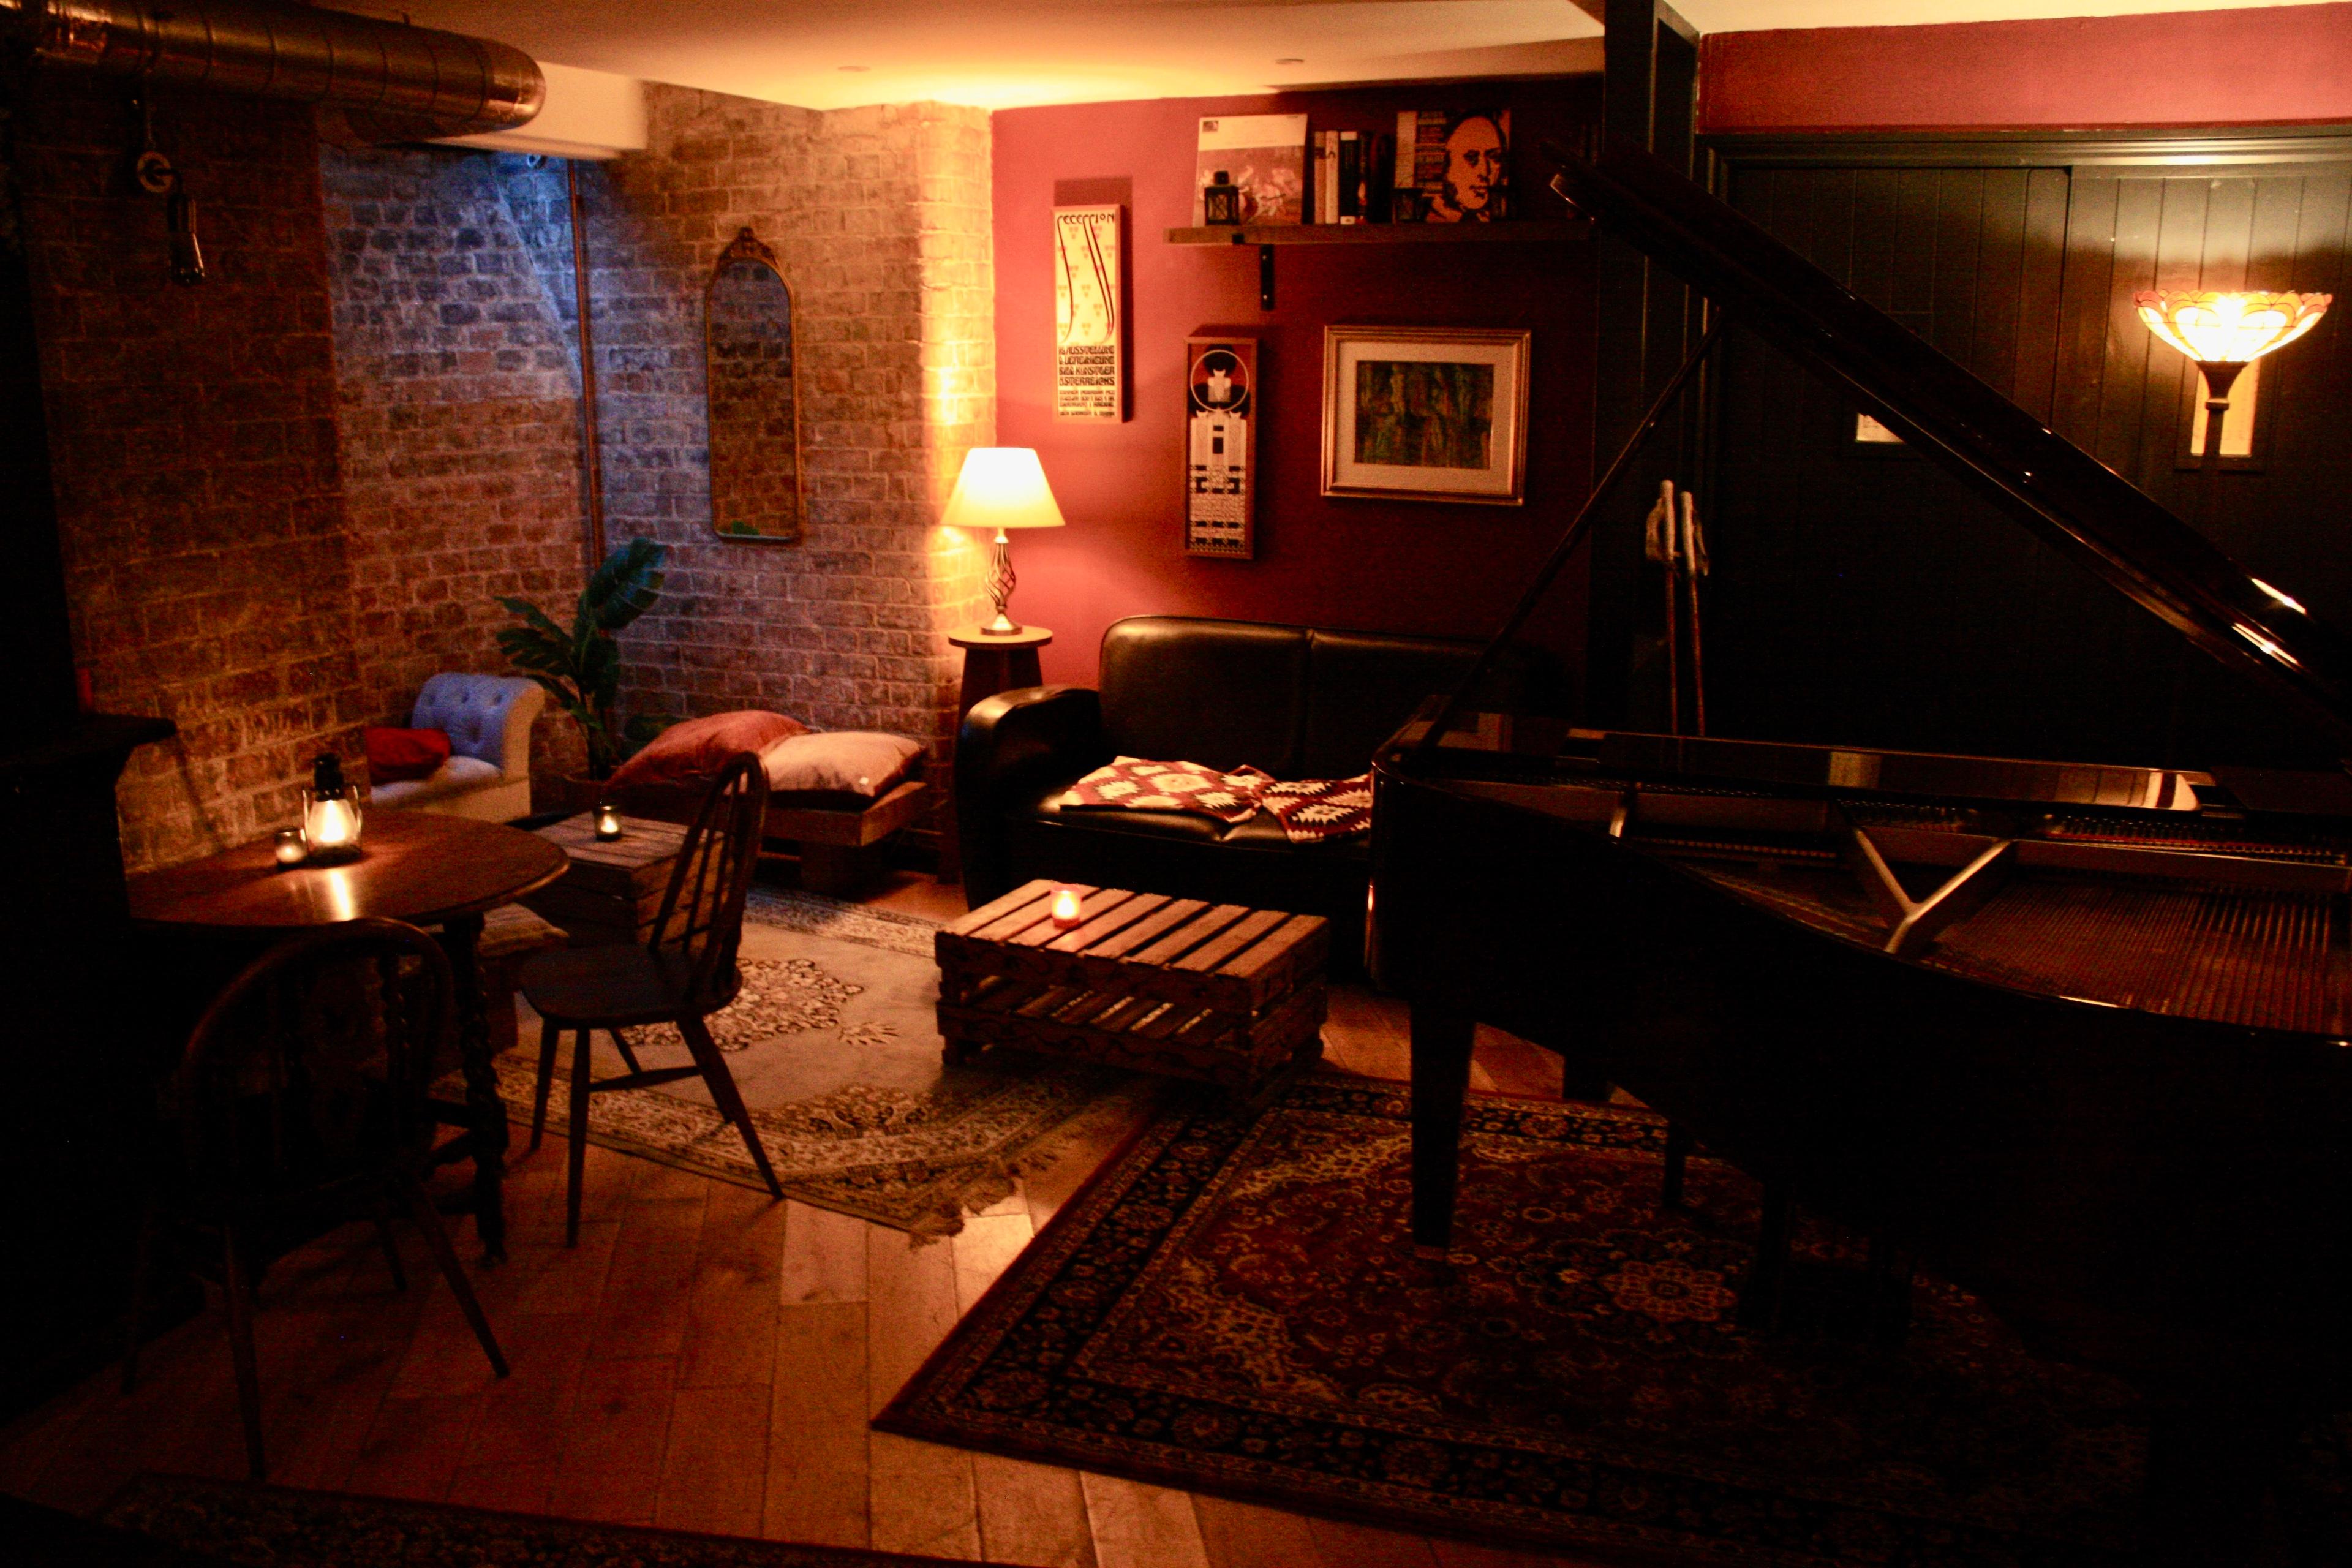 The Lounge, Fidelio Cafe photo #2